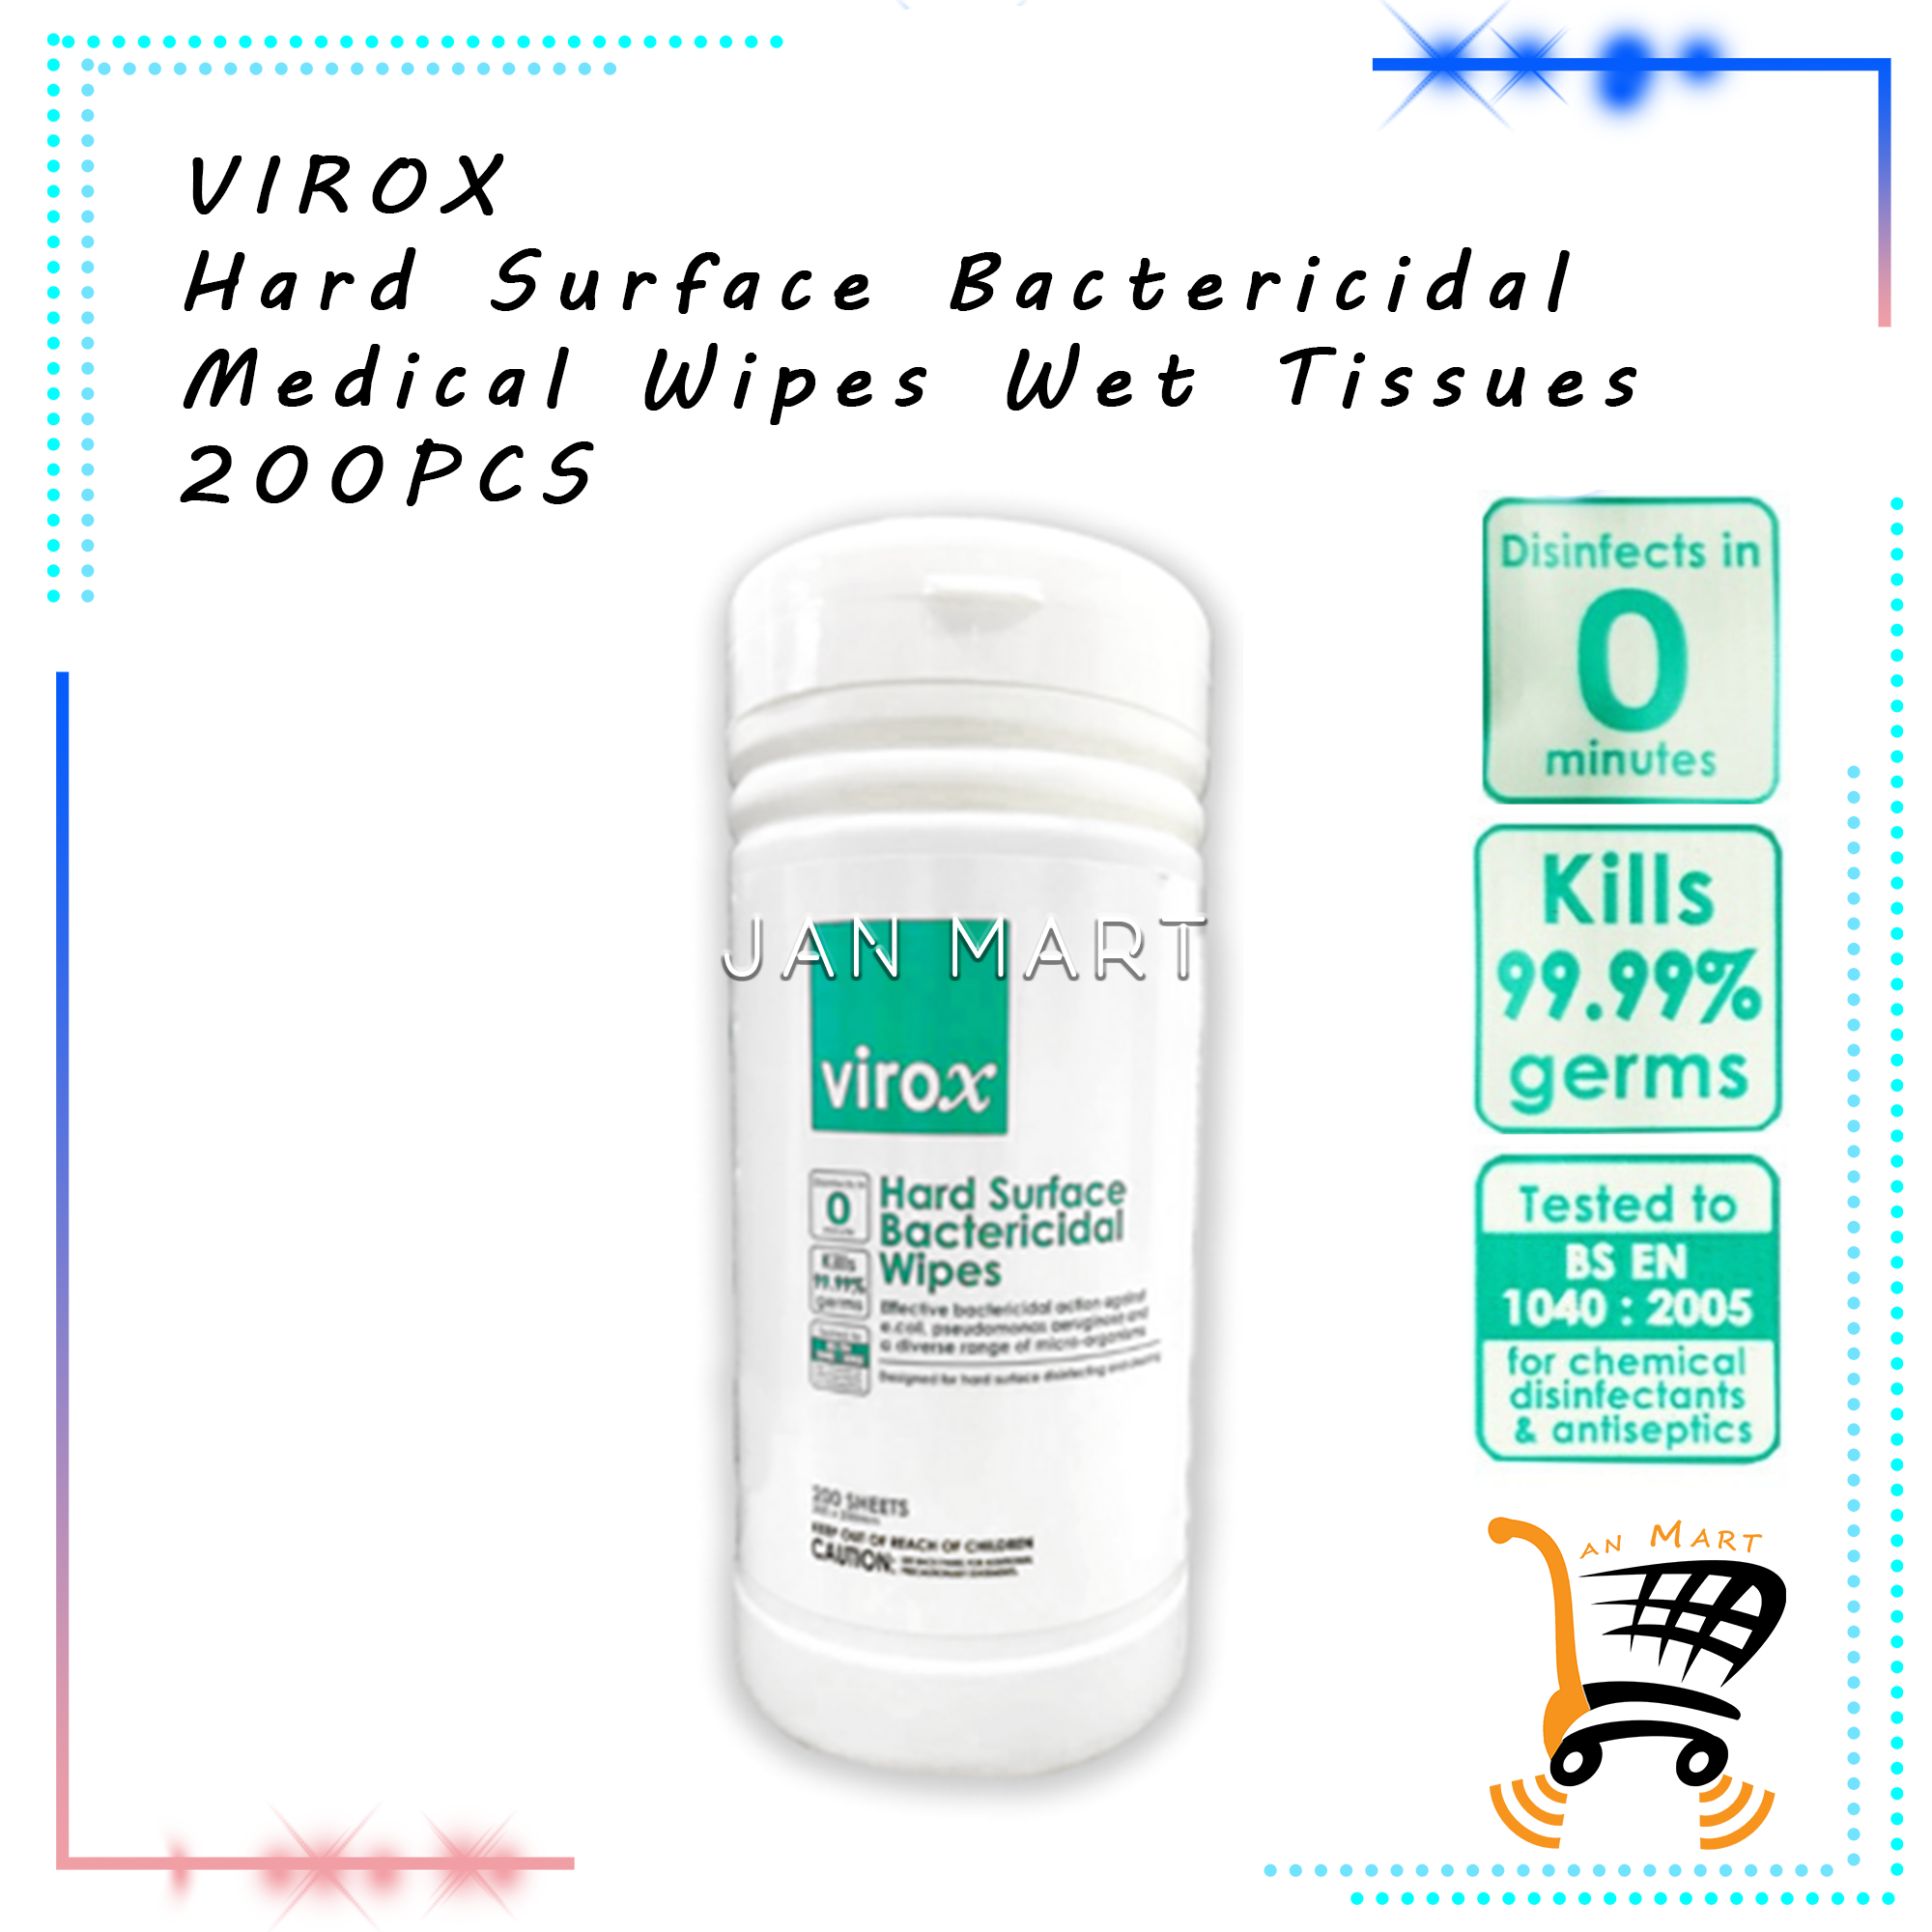 VIROX Hard Surface Bactericidal Medical Wipes Wet Tissues 200PCS